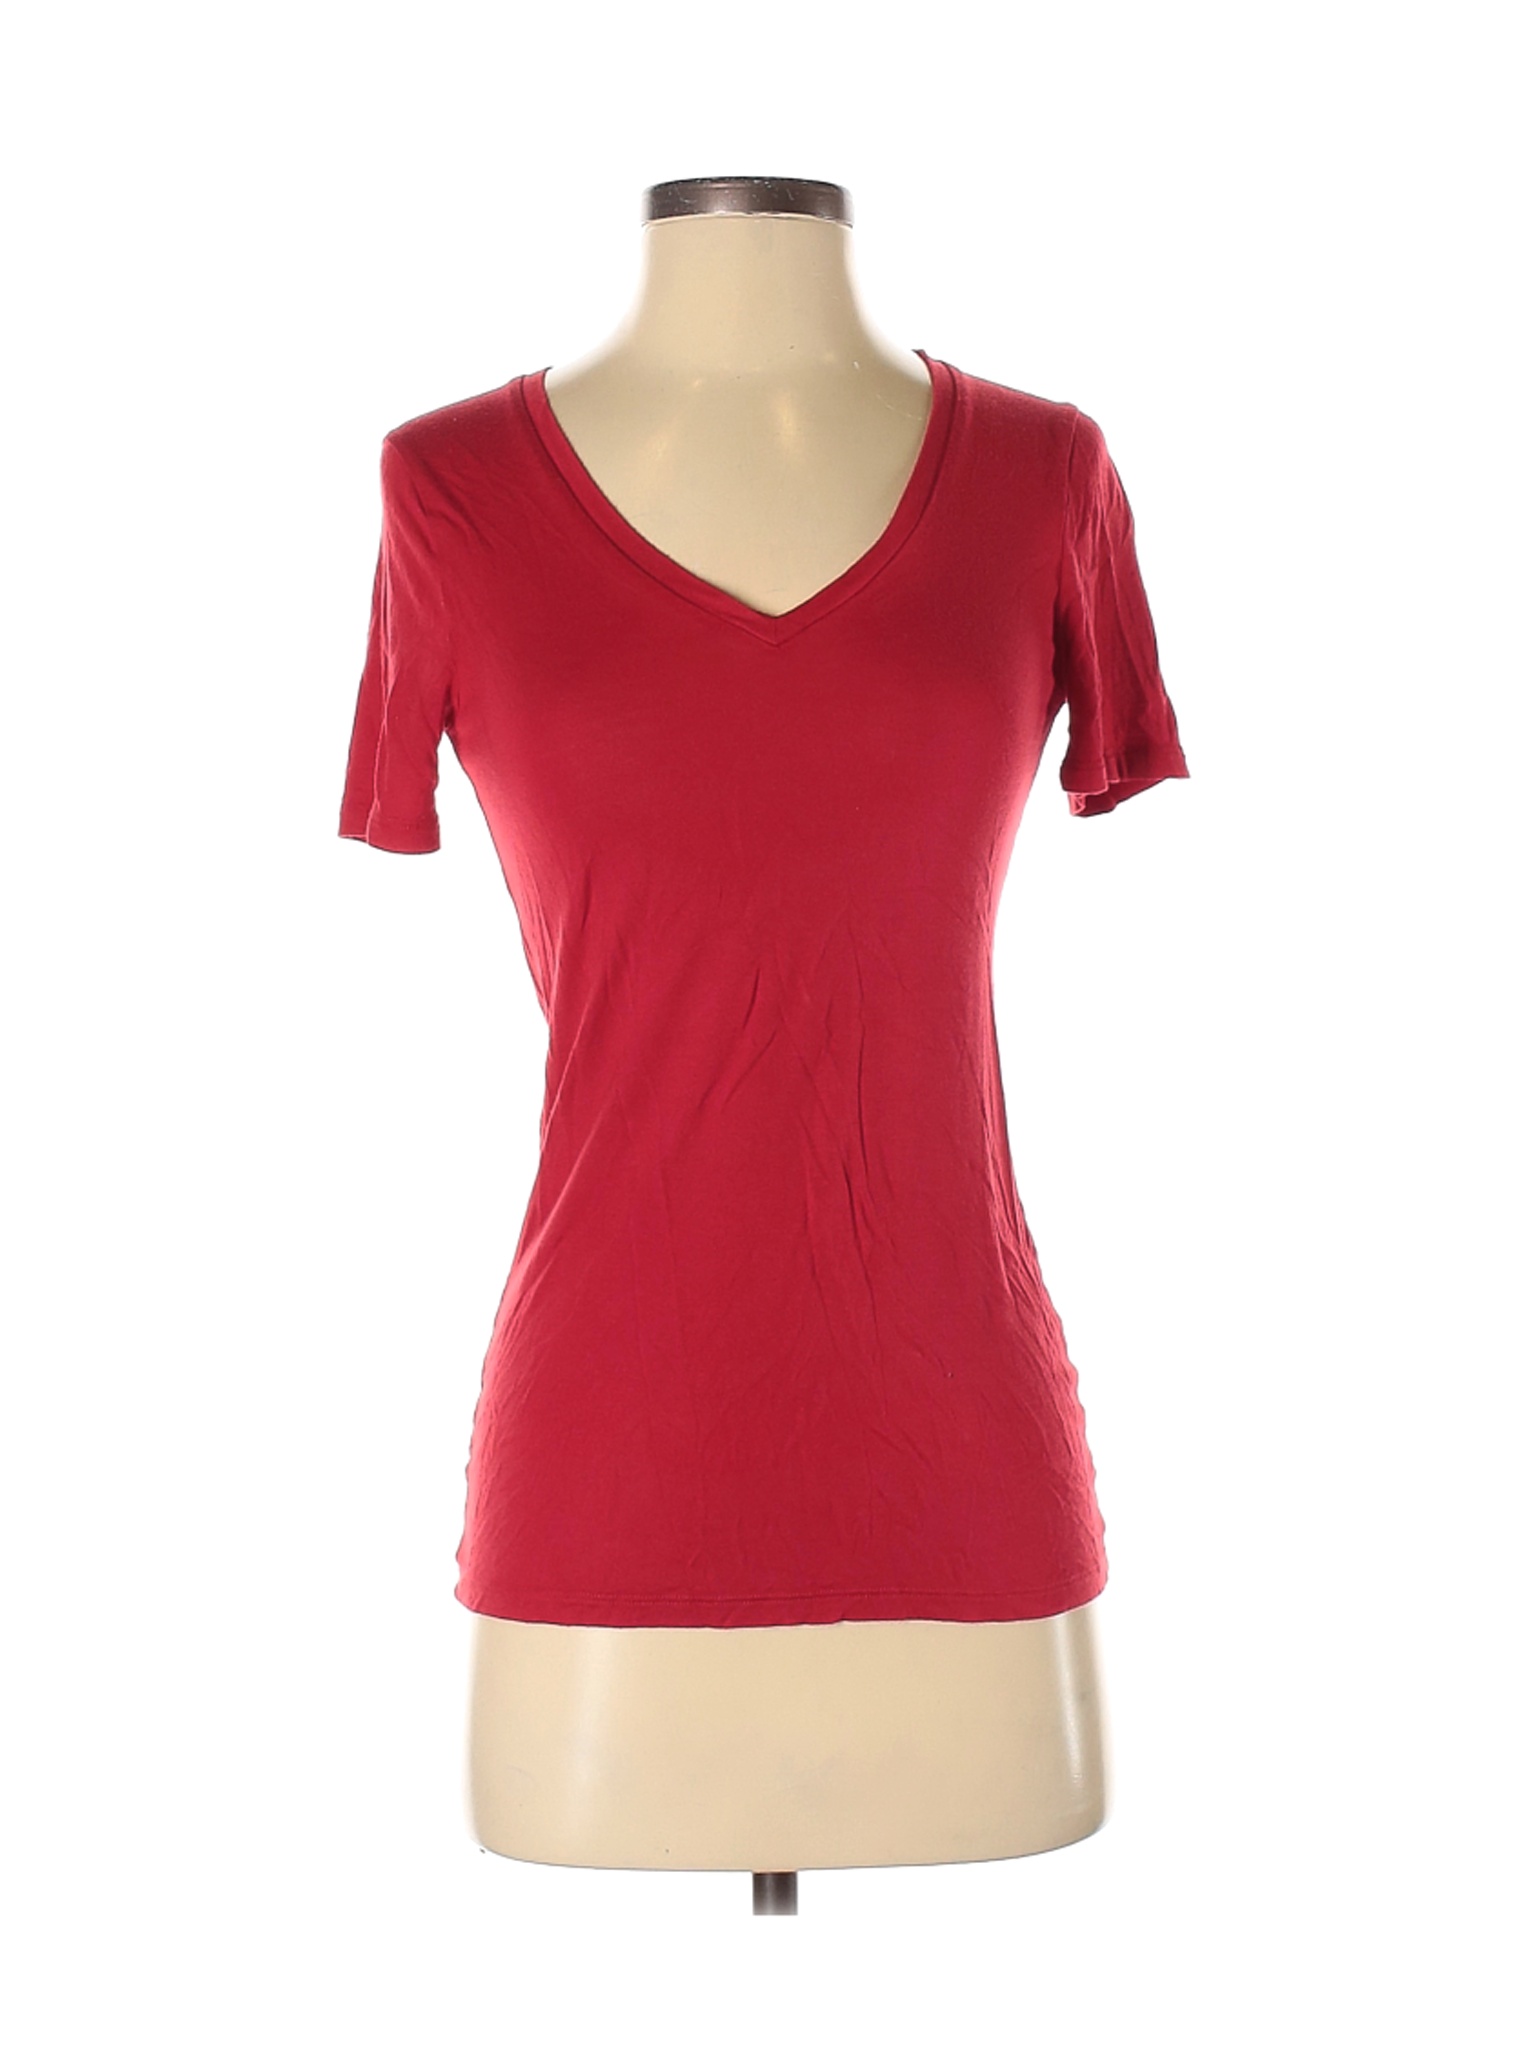 Banana Republic Women Red Short Sleeve T-Shirt XS | eBay